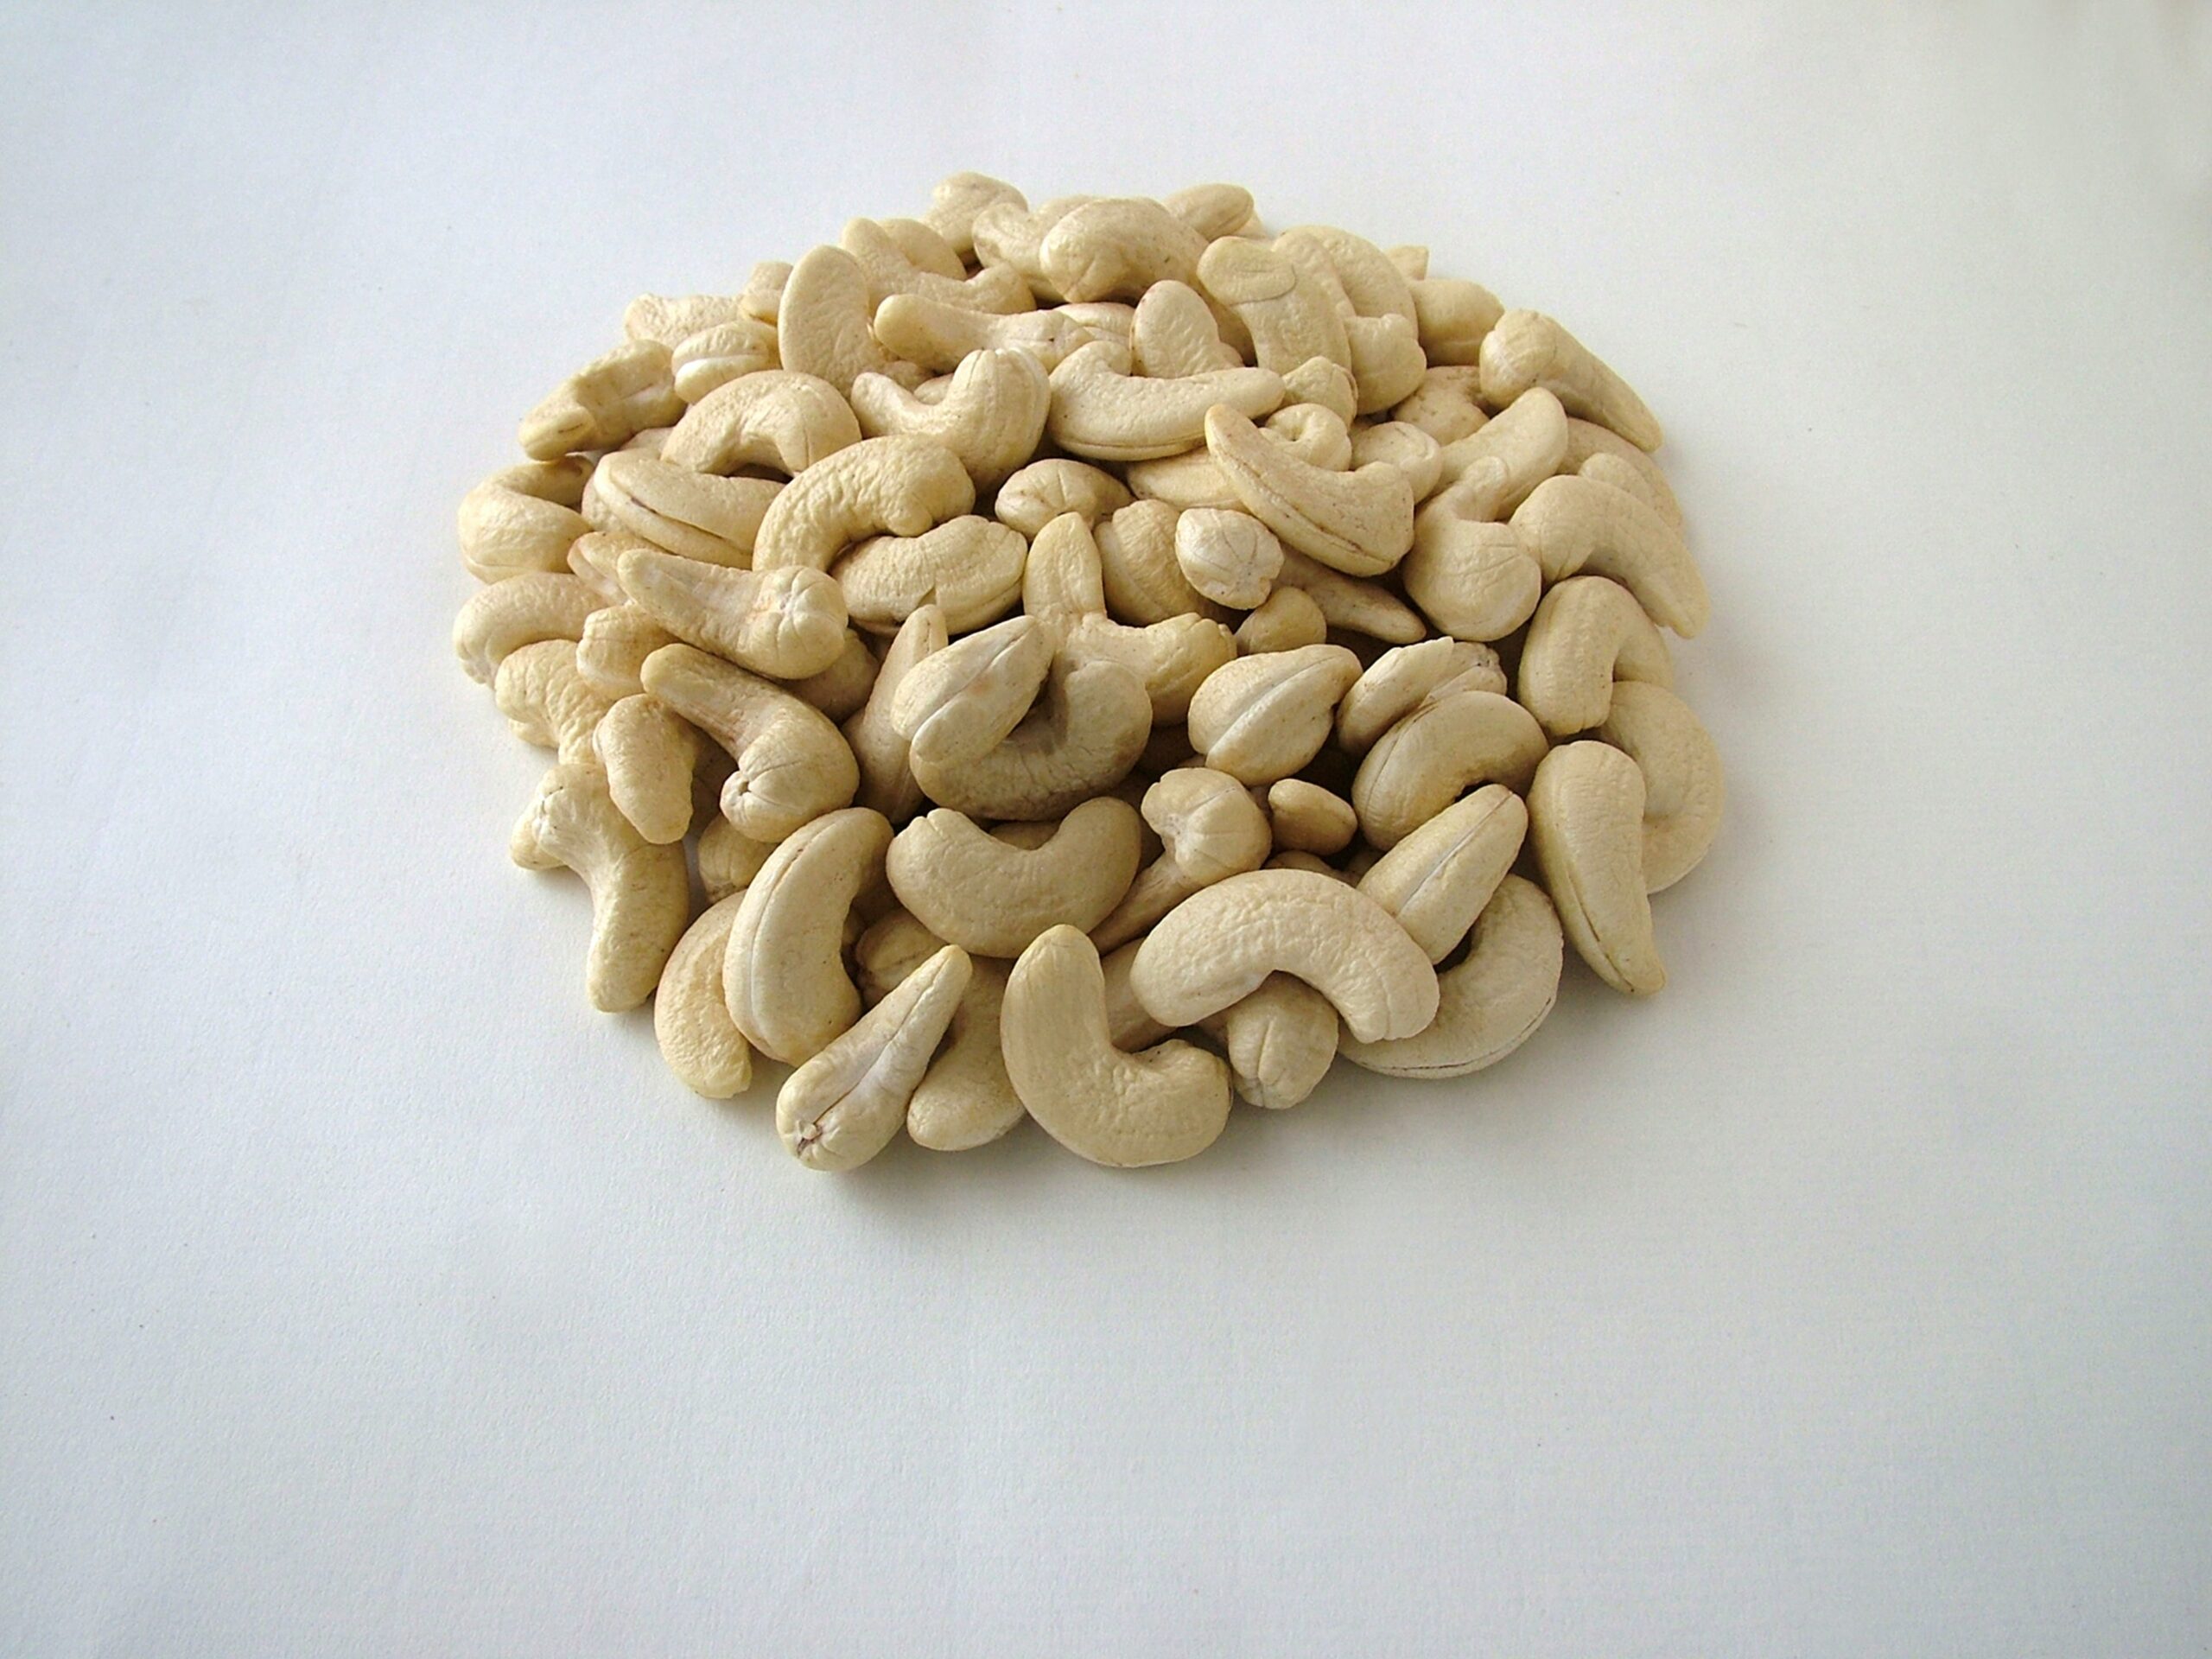 Fresh and creamy cashews arranged in heap.